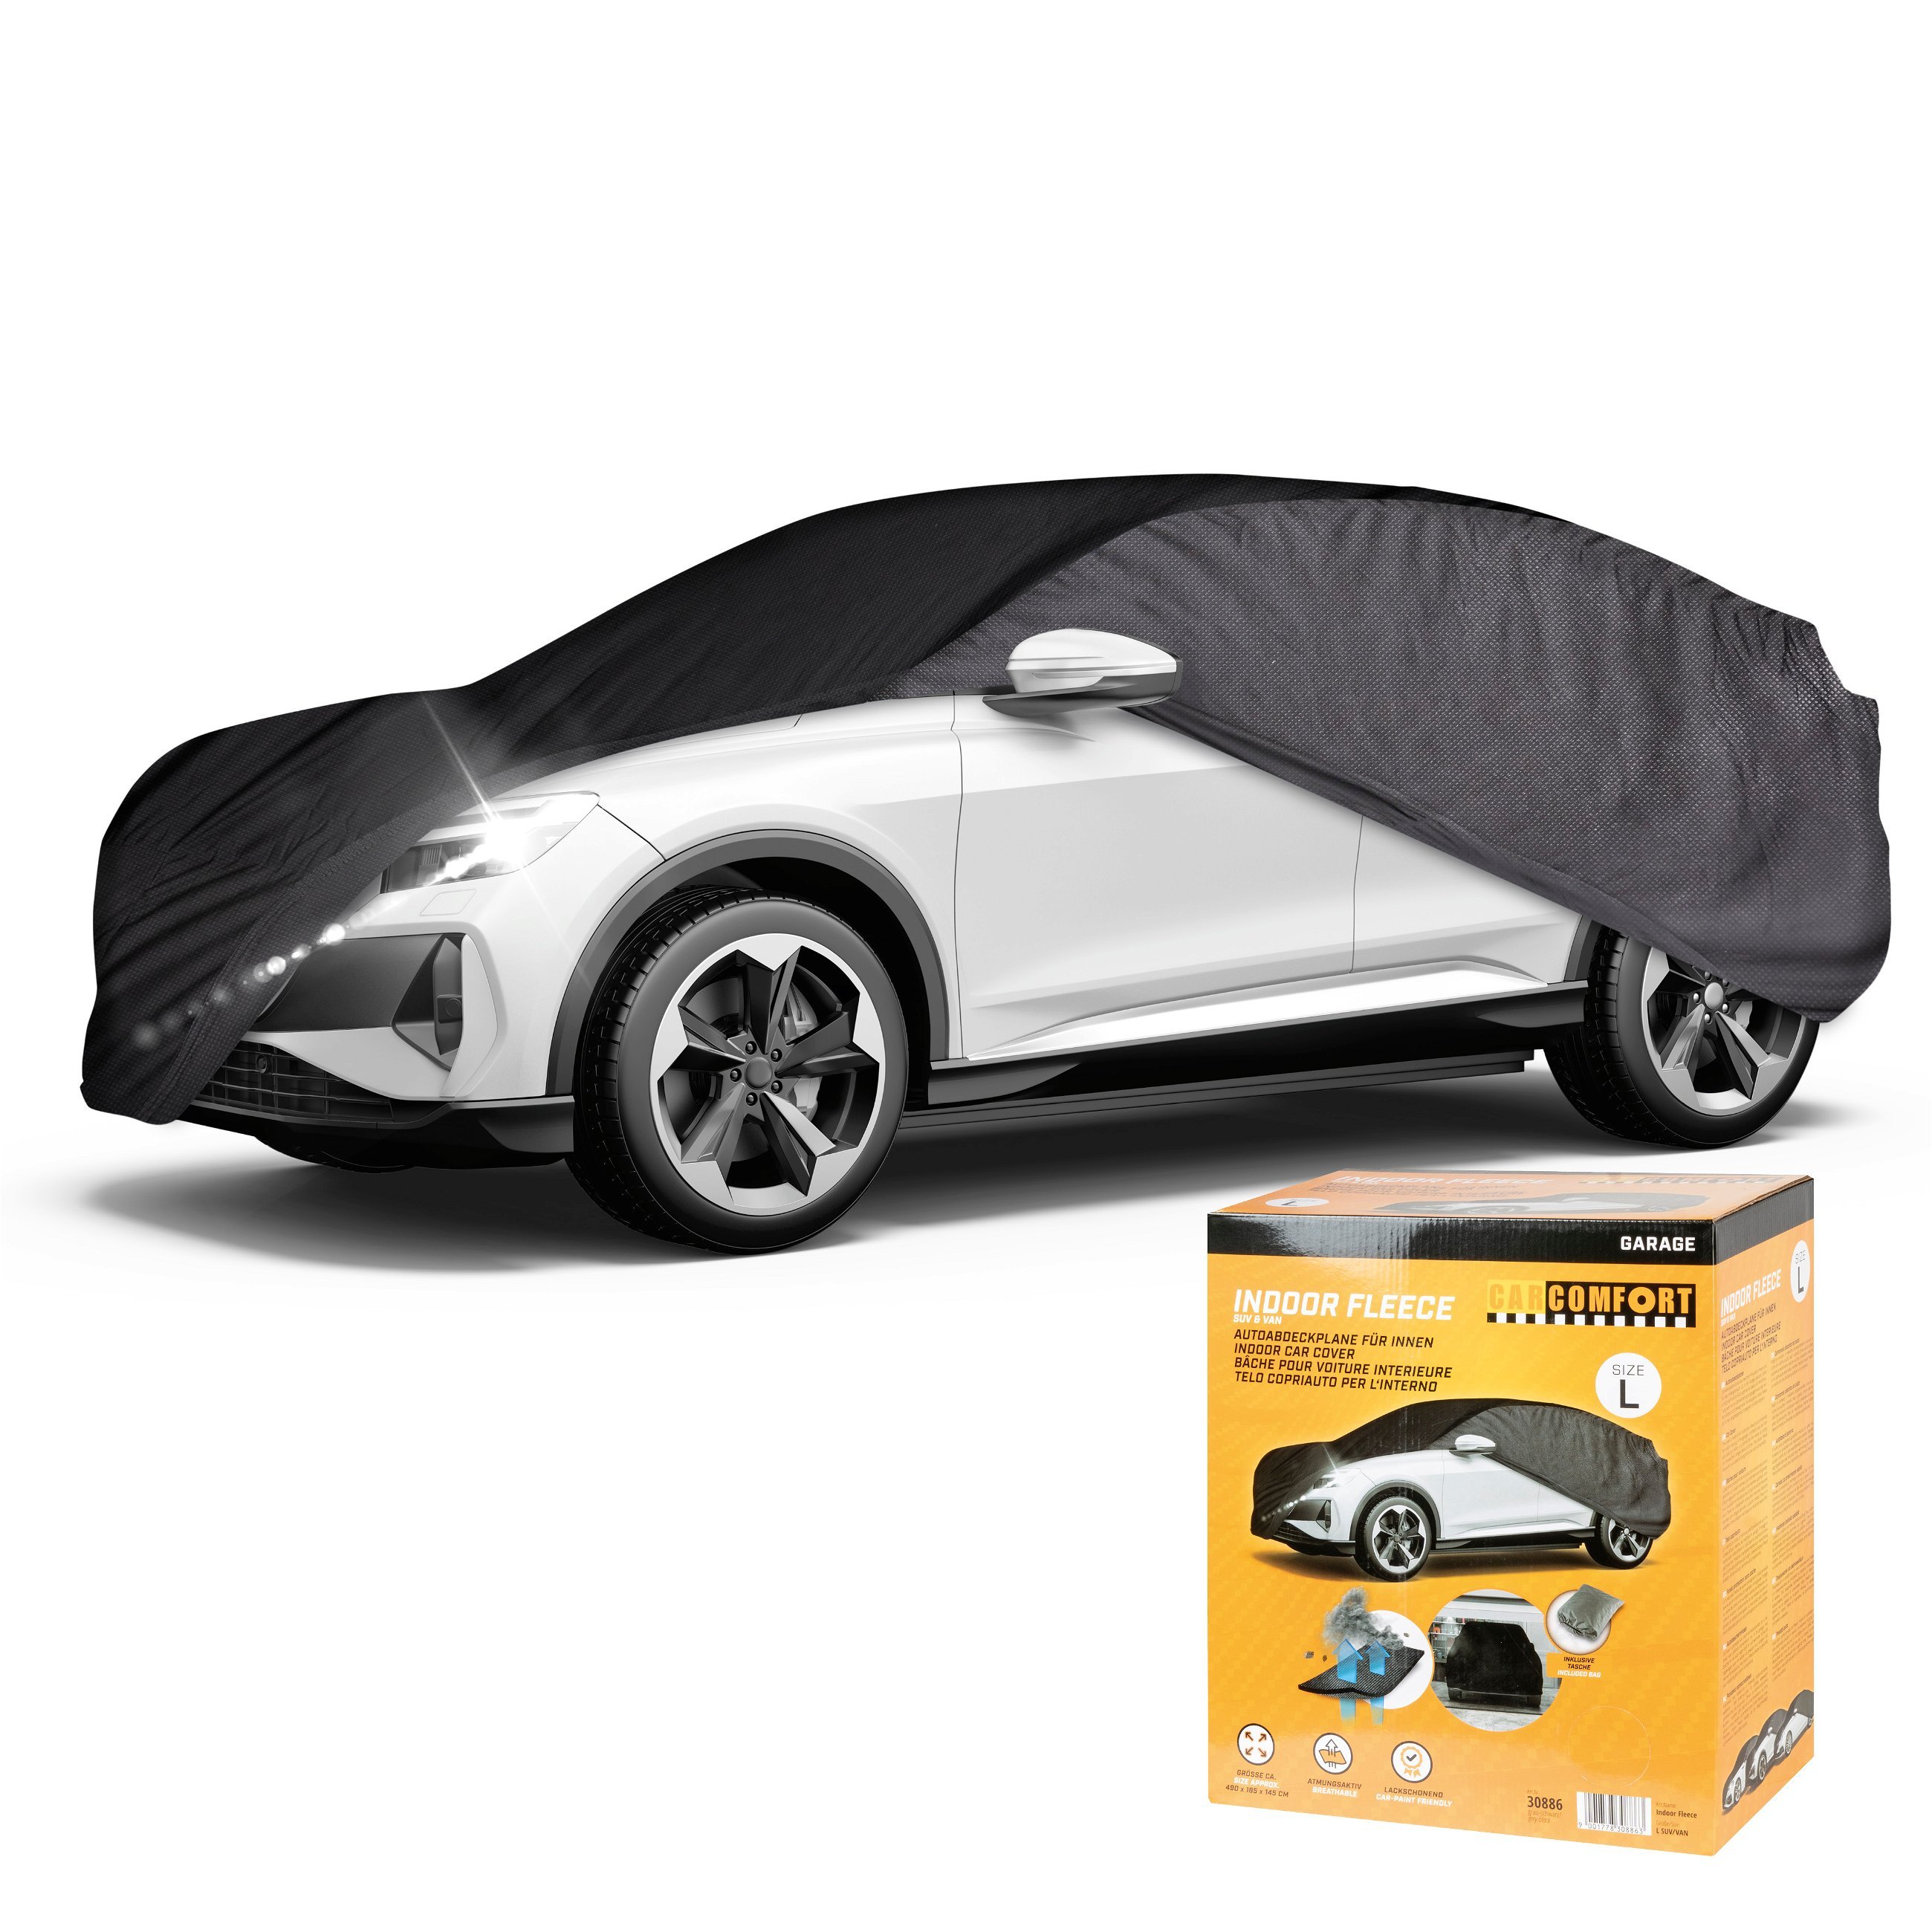 Car tarpaulin Indoor Fleece SUV size L grey/black